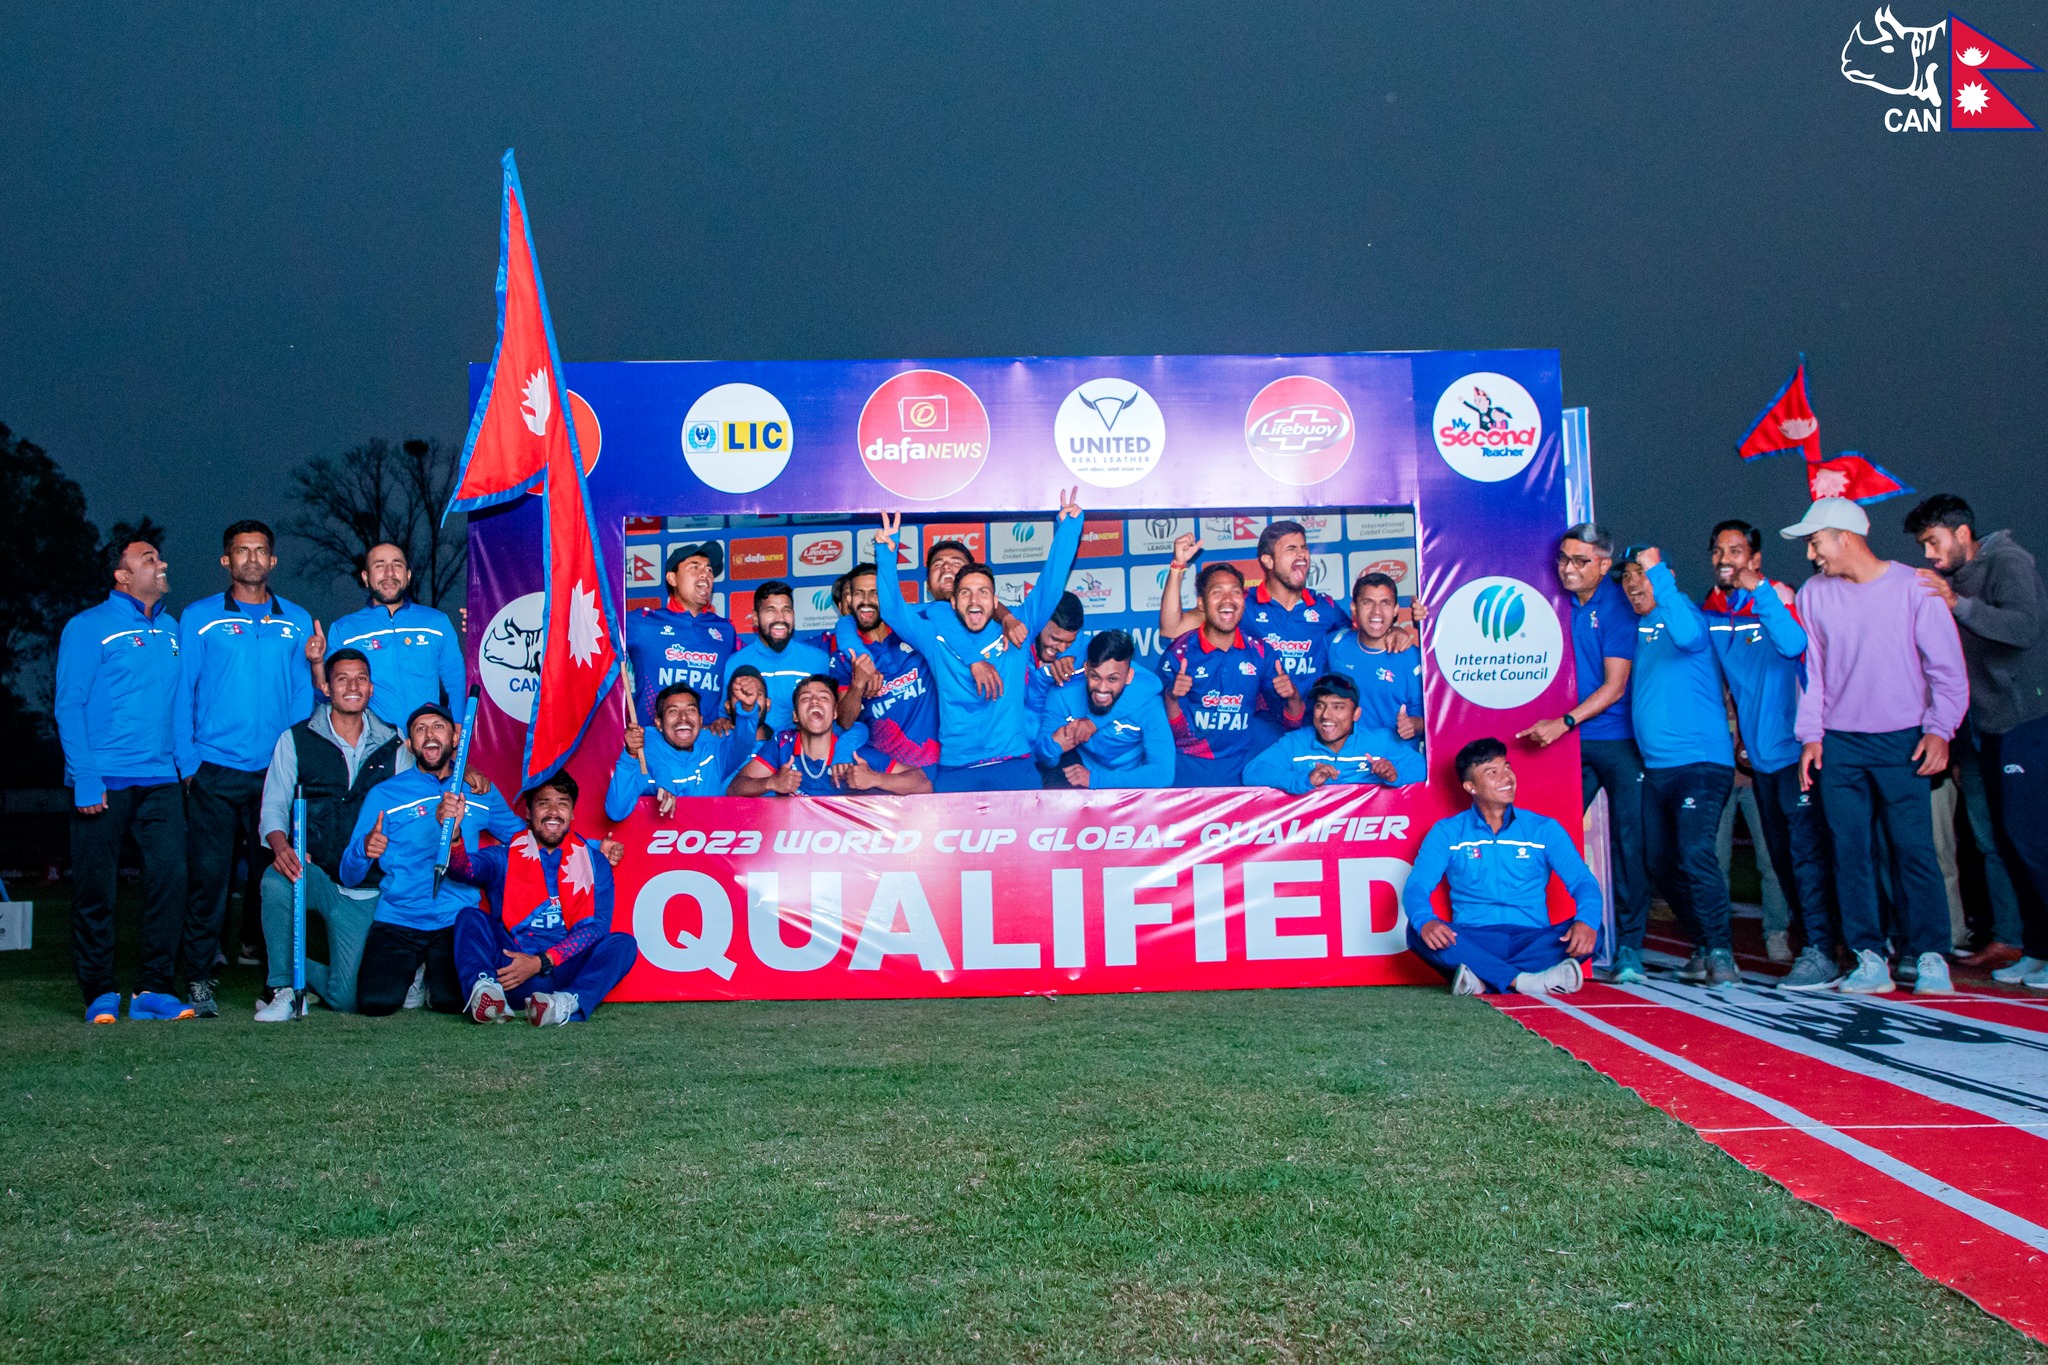 विश्वकप छनोट खेल्ने १० देशको टुंगो, नेपालसँगै विश्वविजेता श्रीलंकादेखि वेष्ट इन्डिजसम्म